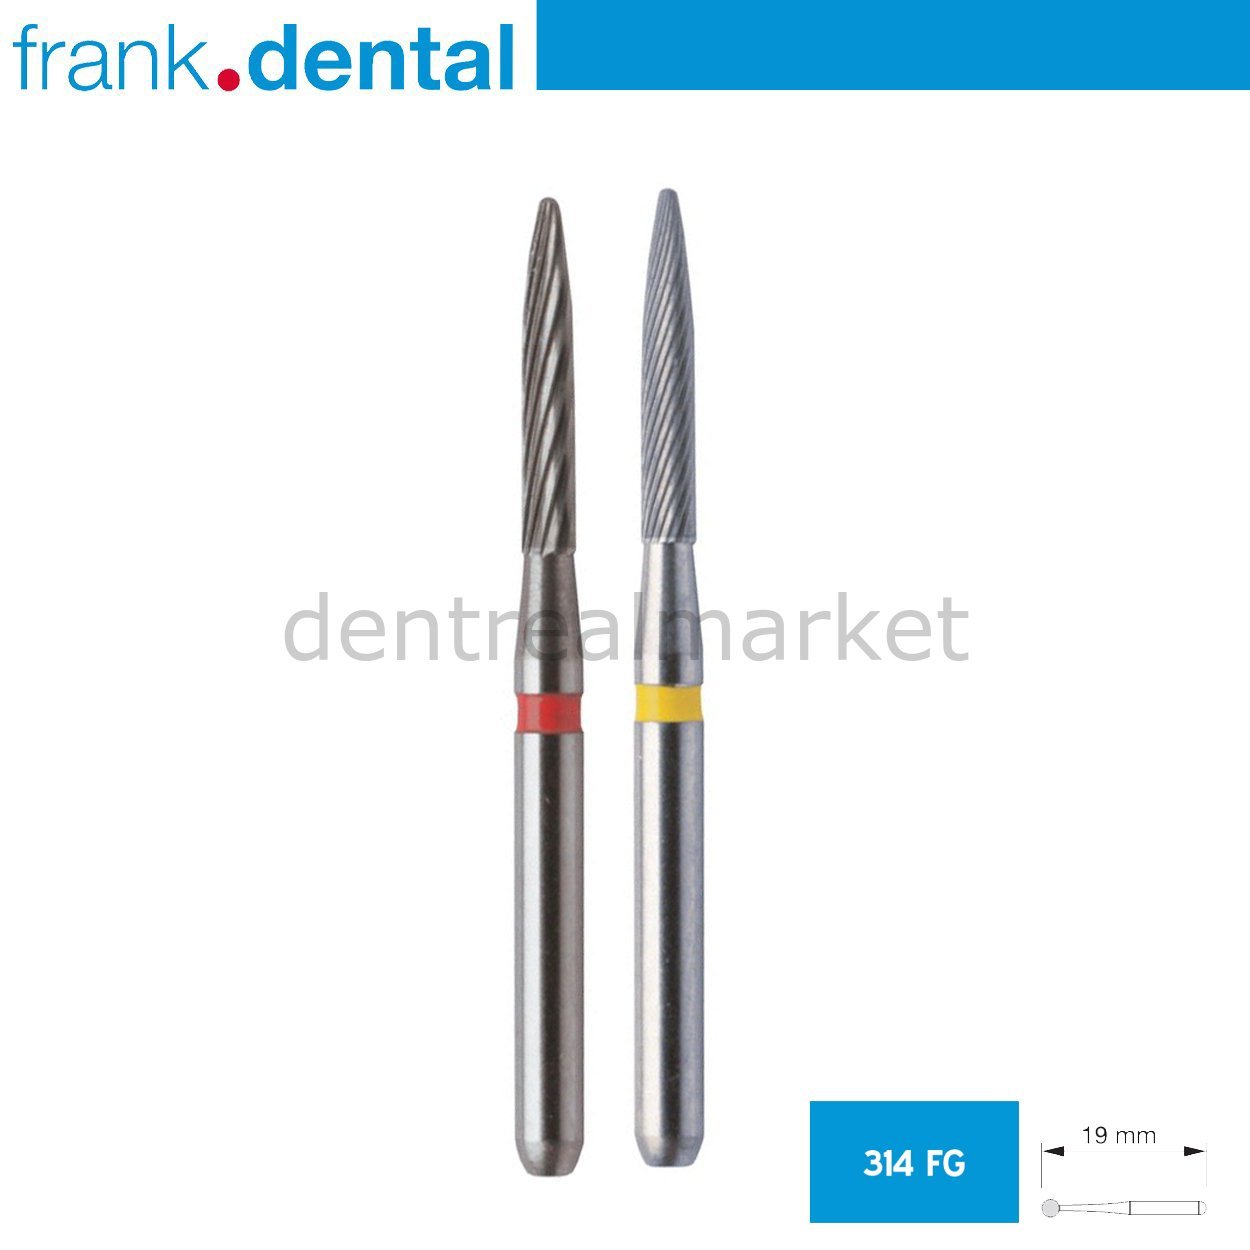 DentrealStore - Frank Dental Orthodontic Adhesive Remover & Debonding Bur - C48L - Pcs